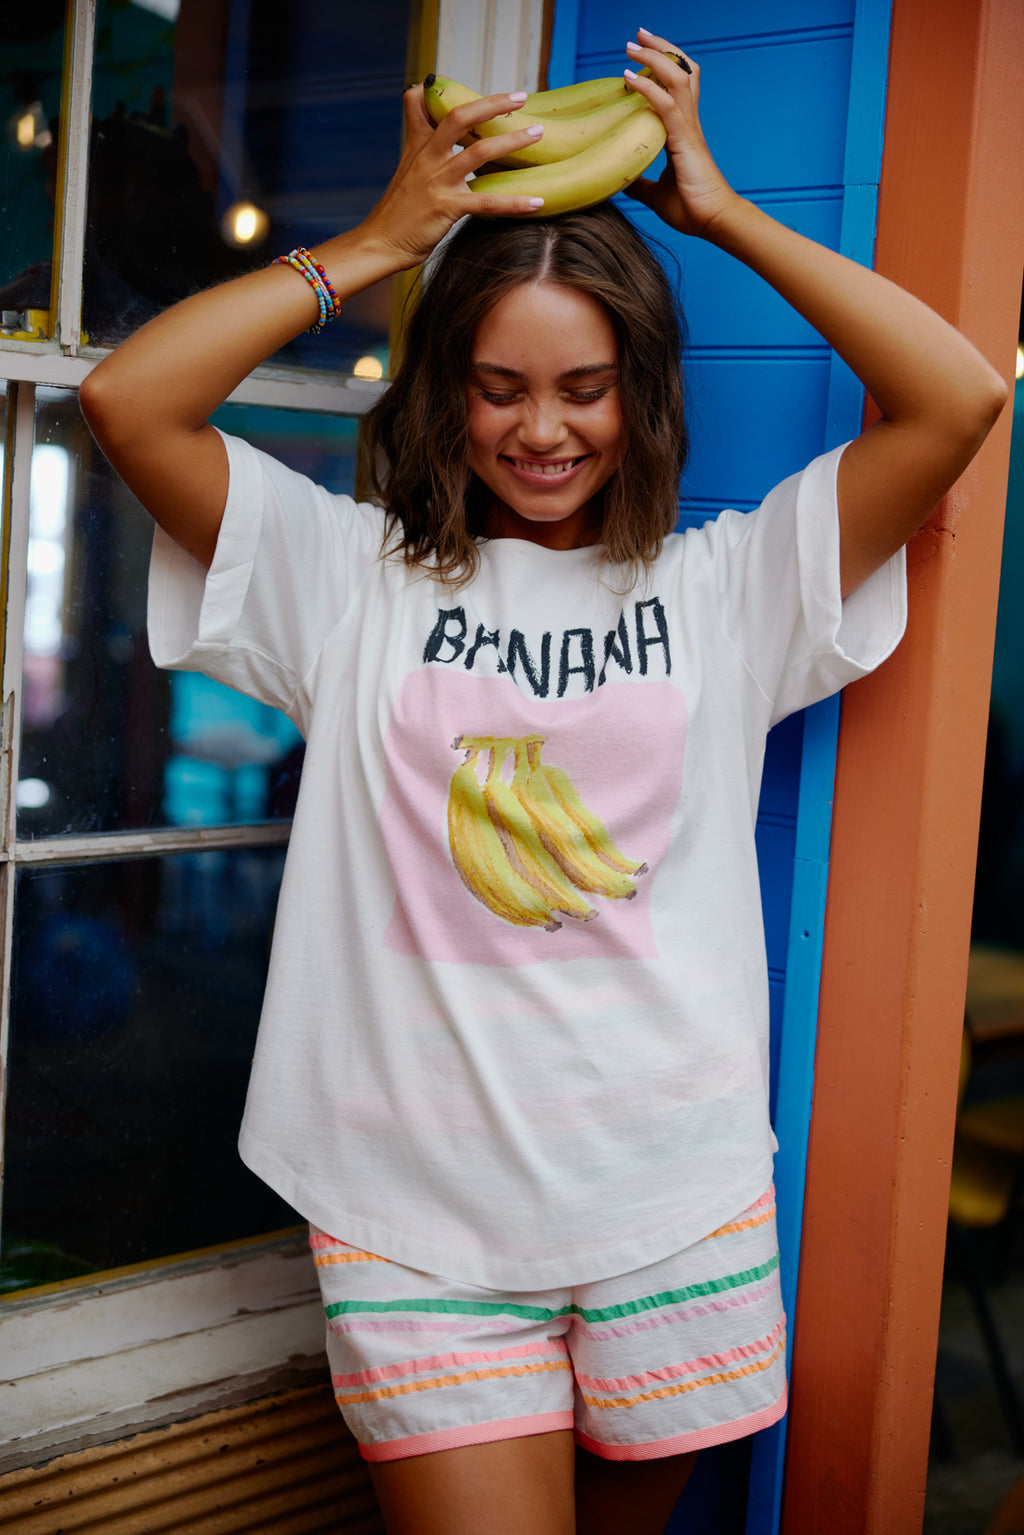 Bananarama T-Shirt -12